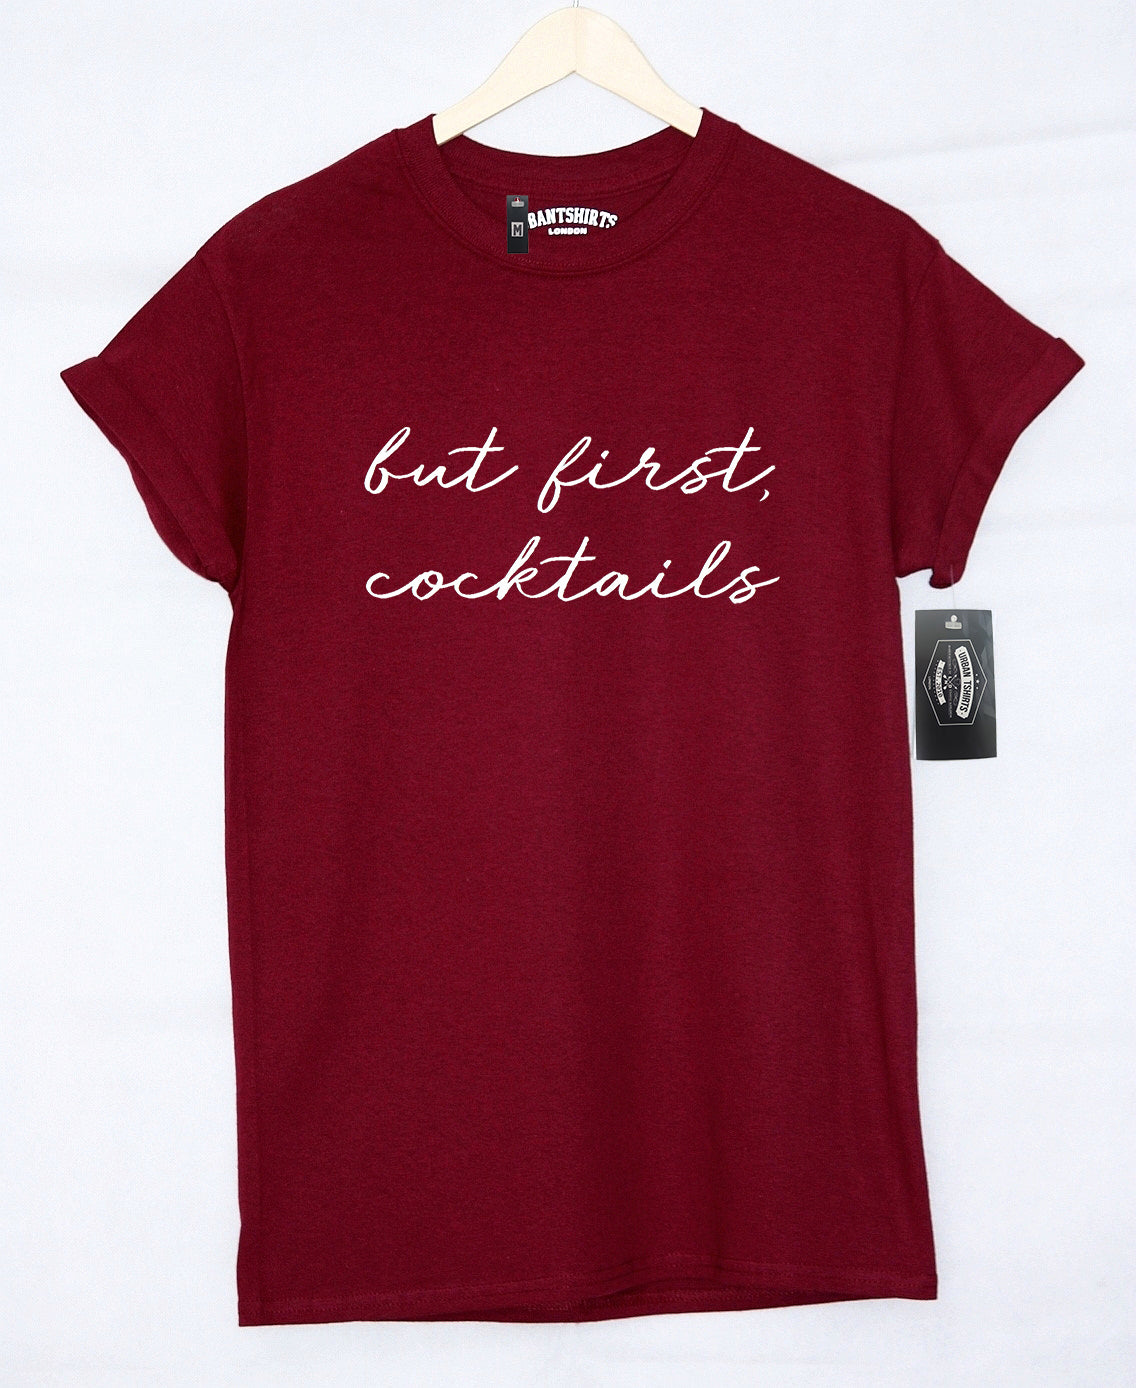 But First Cocktails T-shirt - Urbantshirts.co.uk